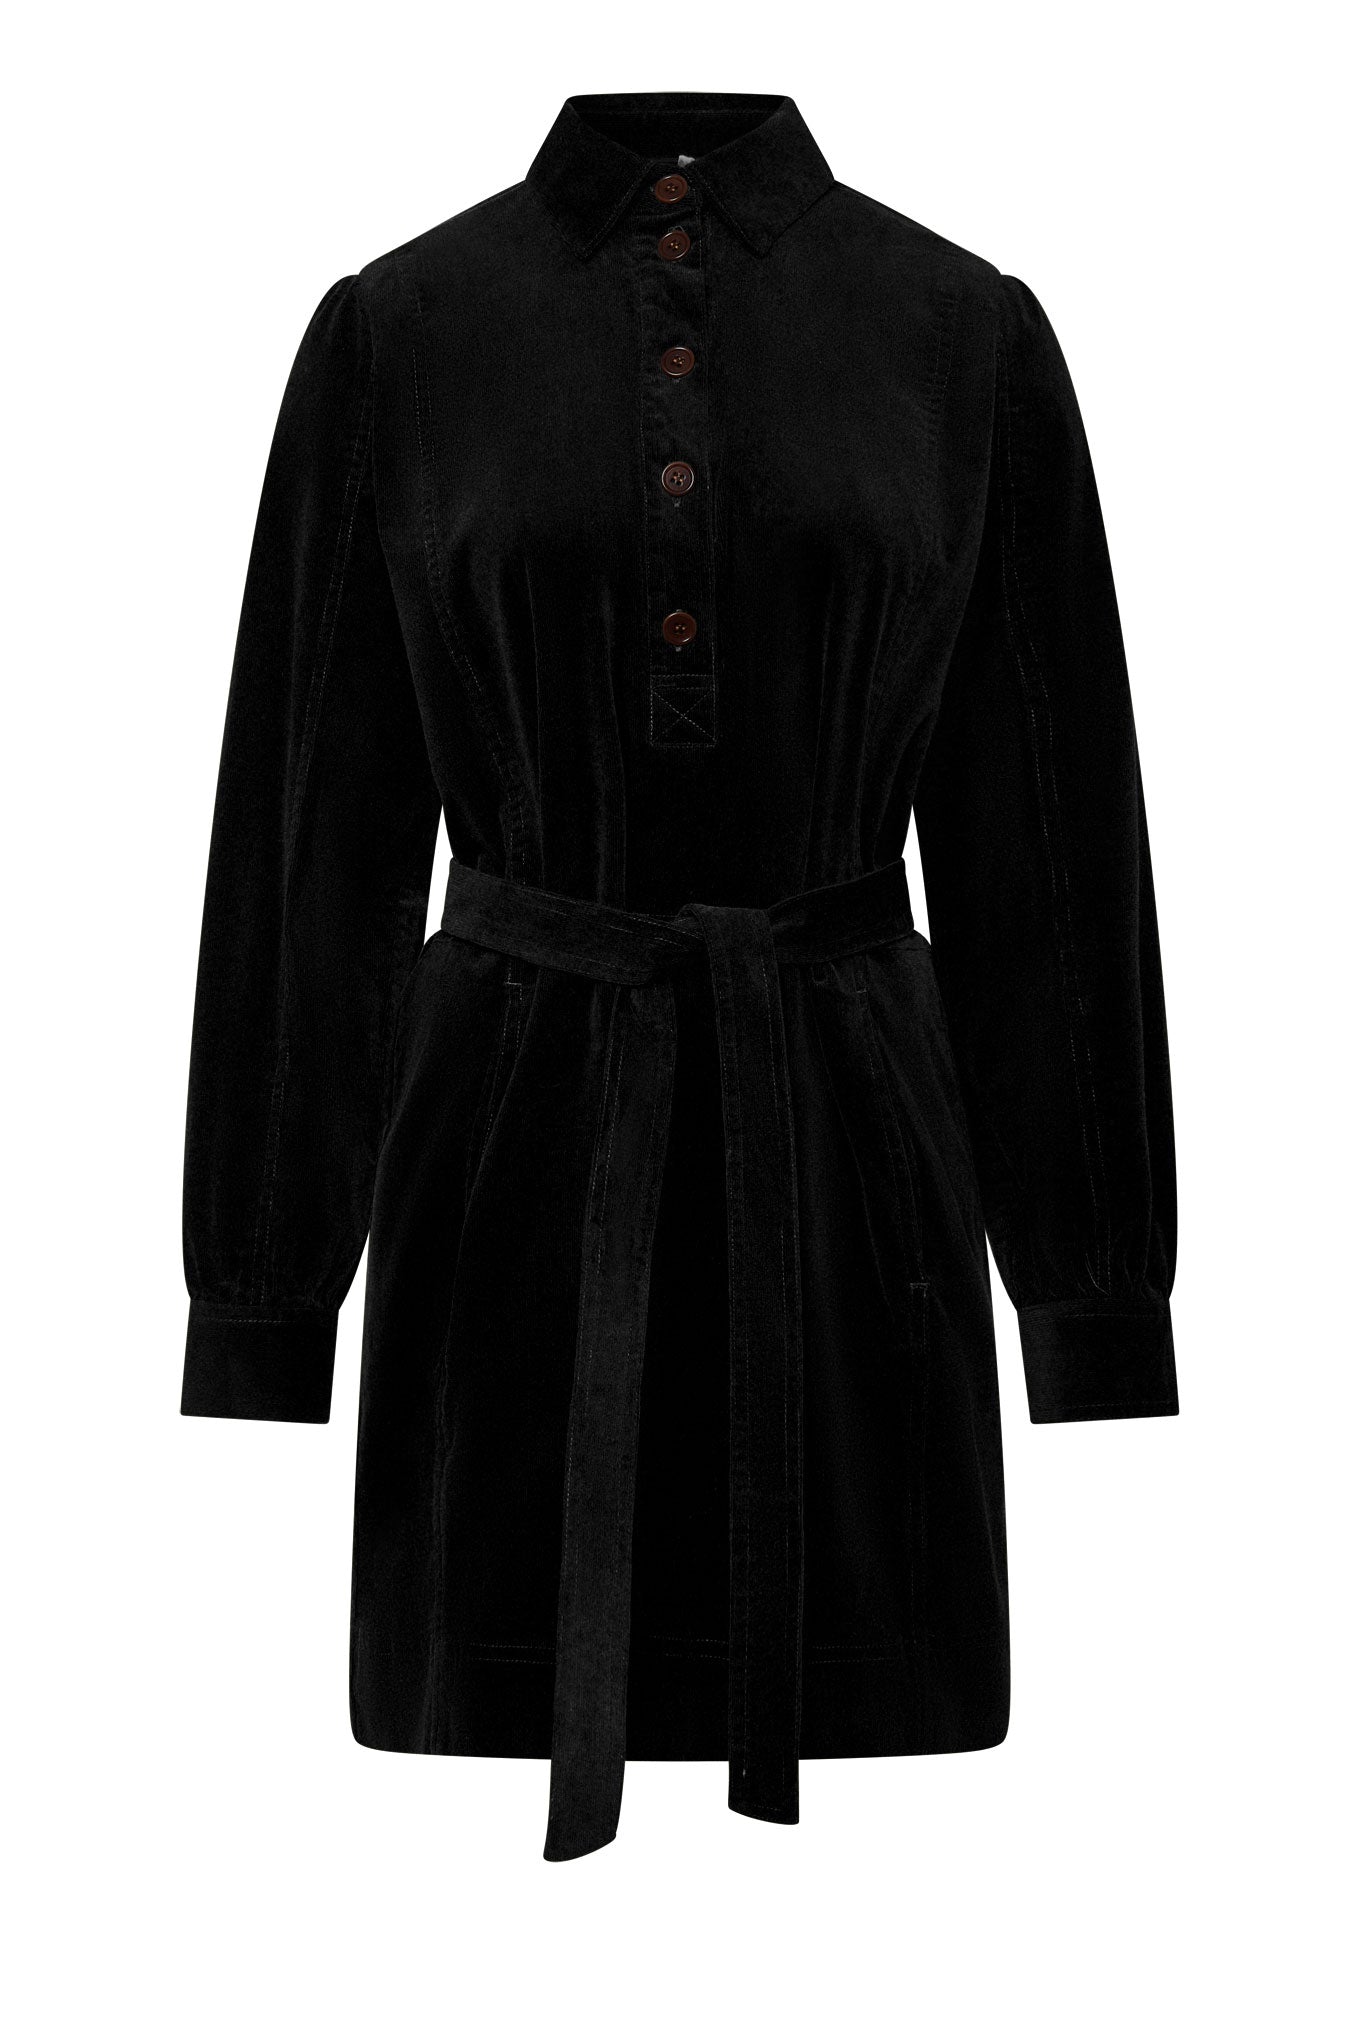 Black, long-sleeved corduroy dress NEPTUNE made of organic cotton by Komodo